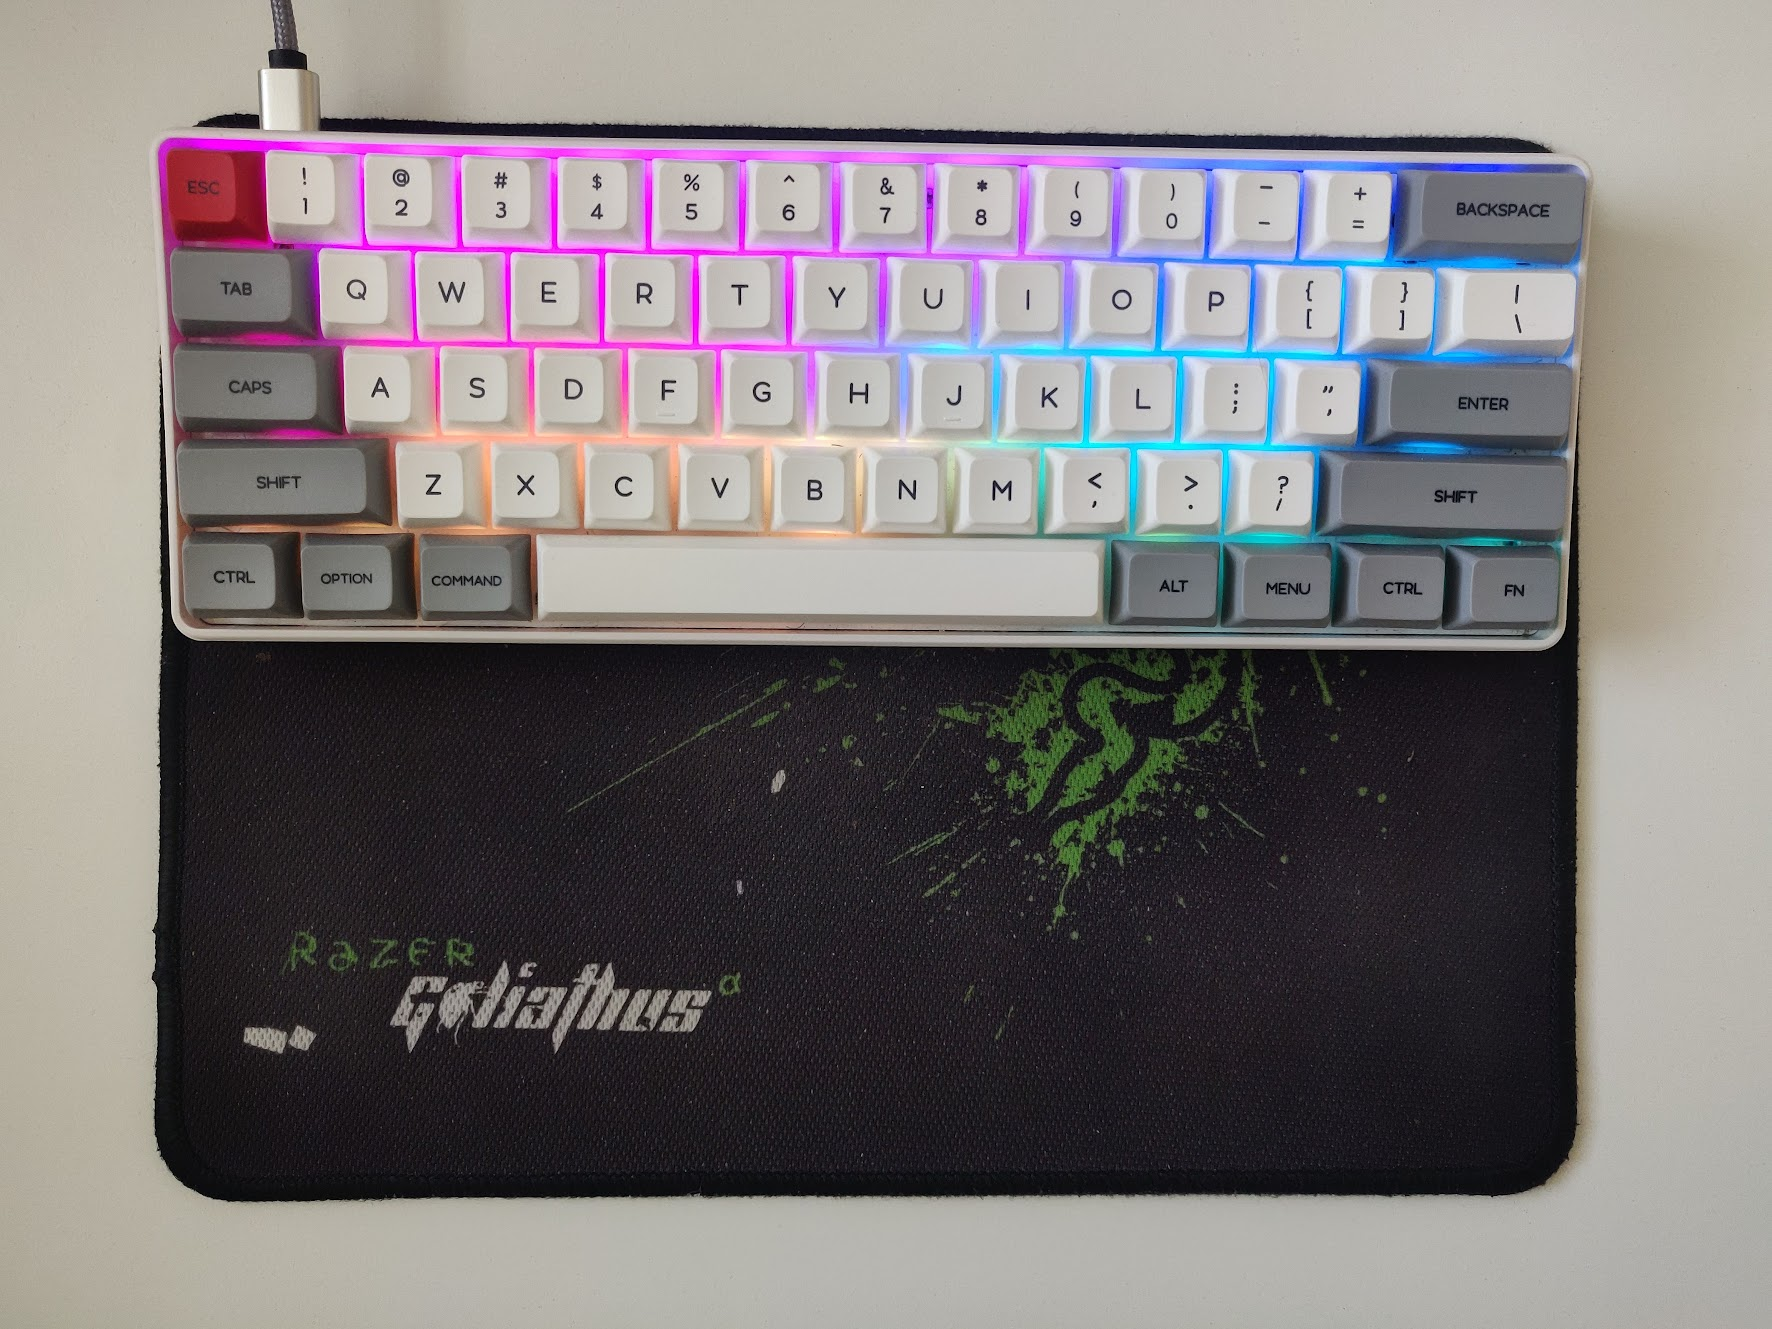 My 60% Keyboard